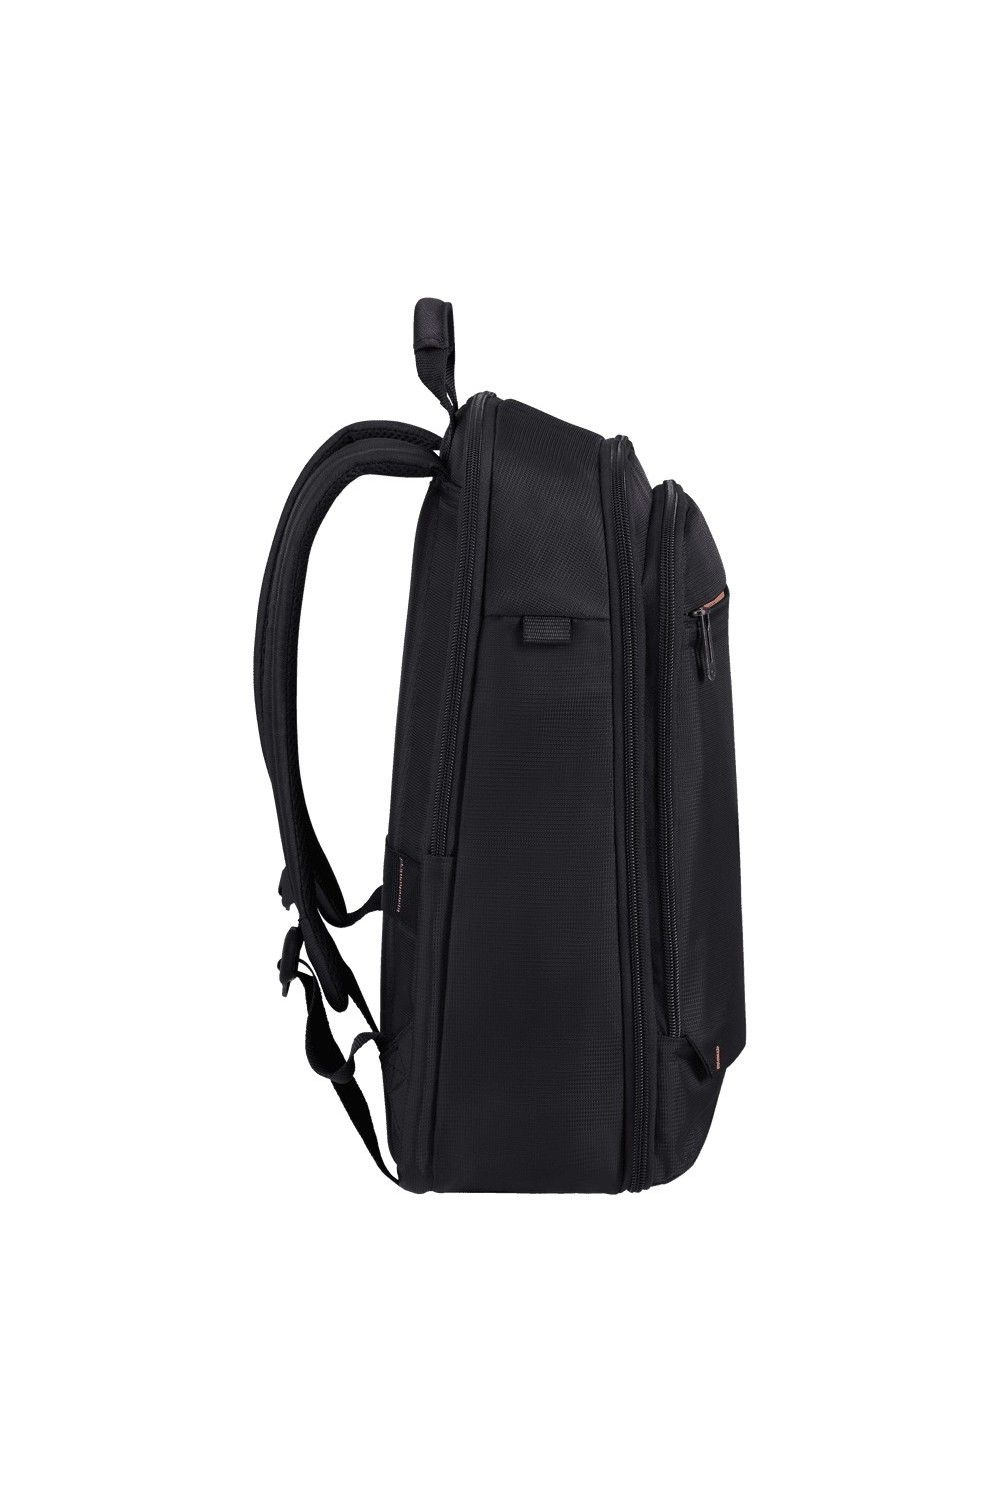 Samsonite Laptop Backpack Network 4 15 pouces black